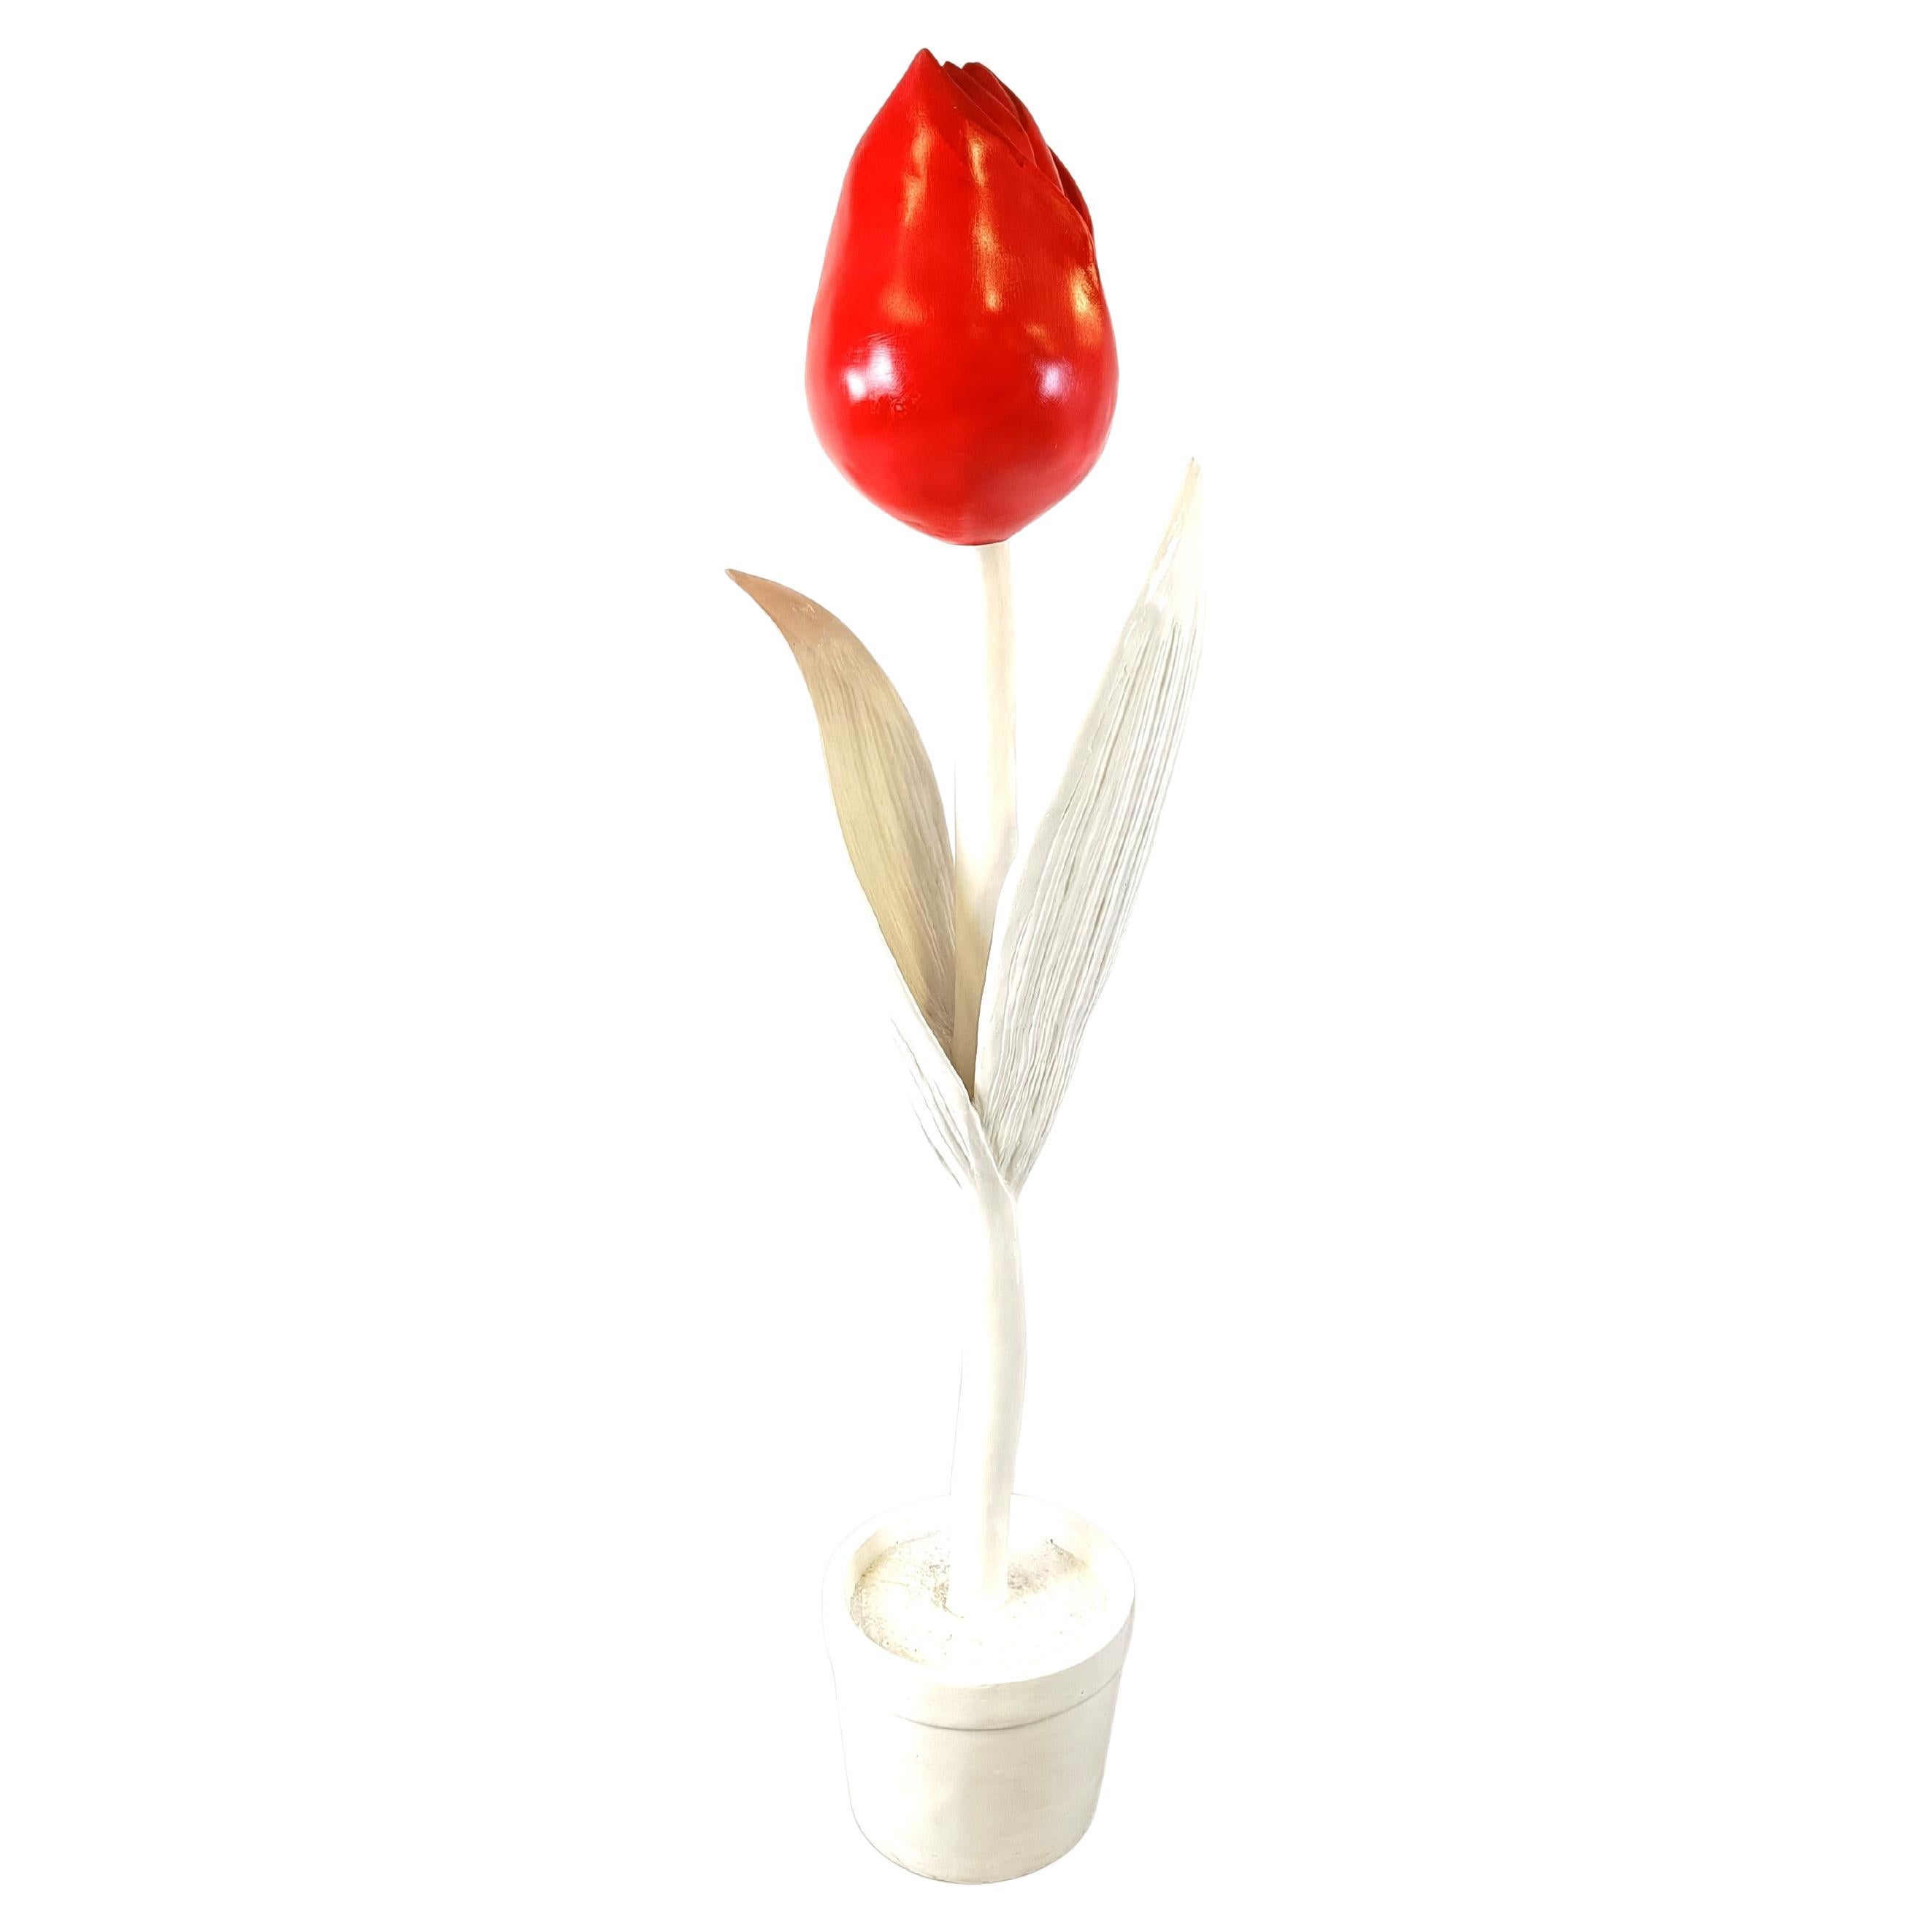 Large decorative tulip, 2m long